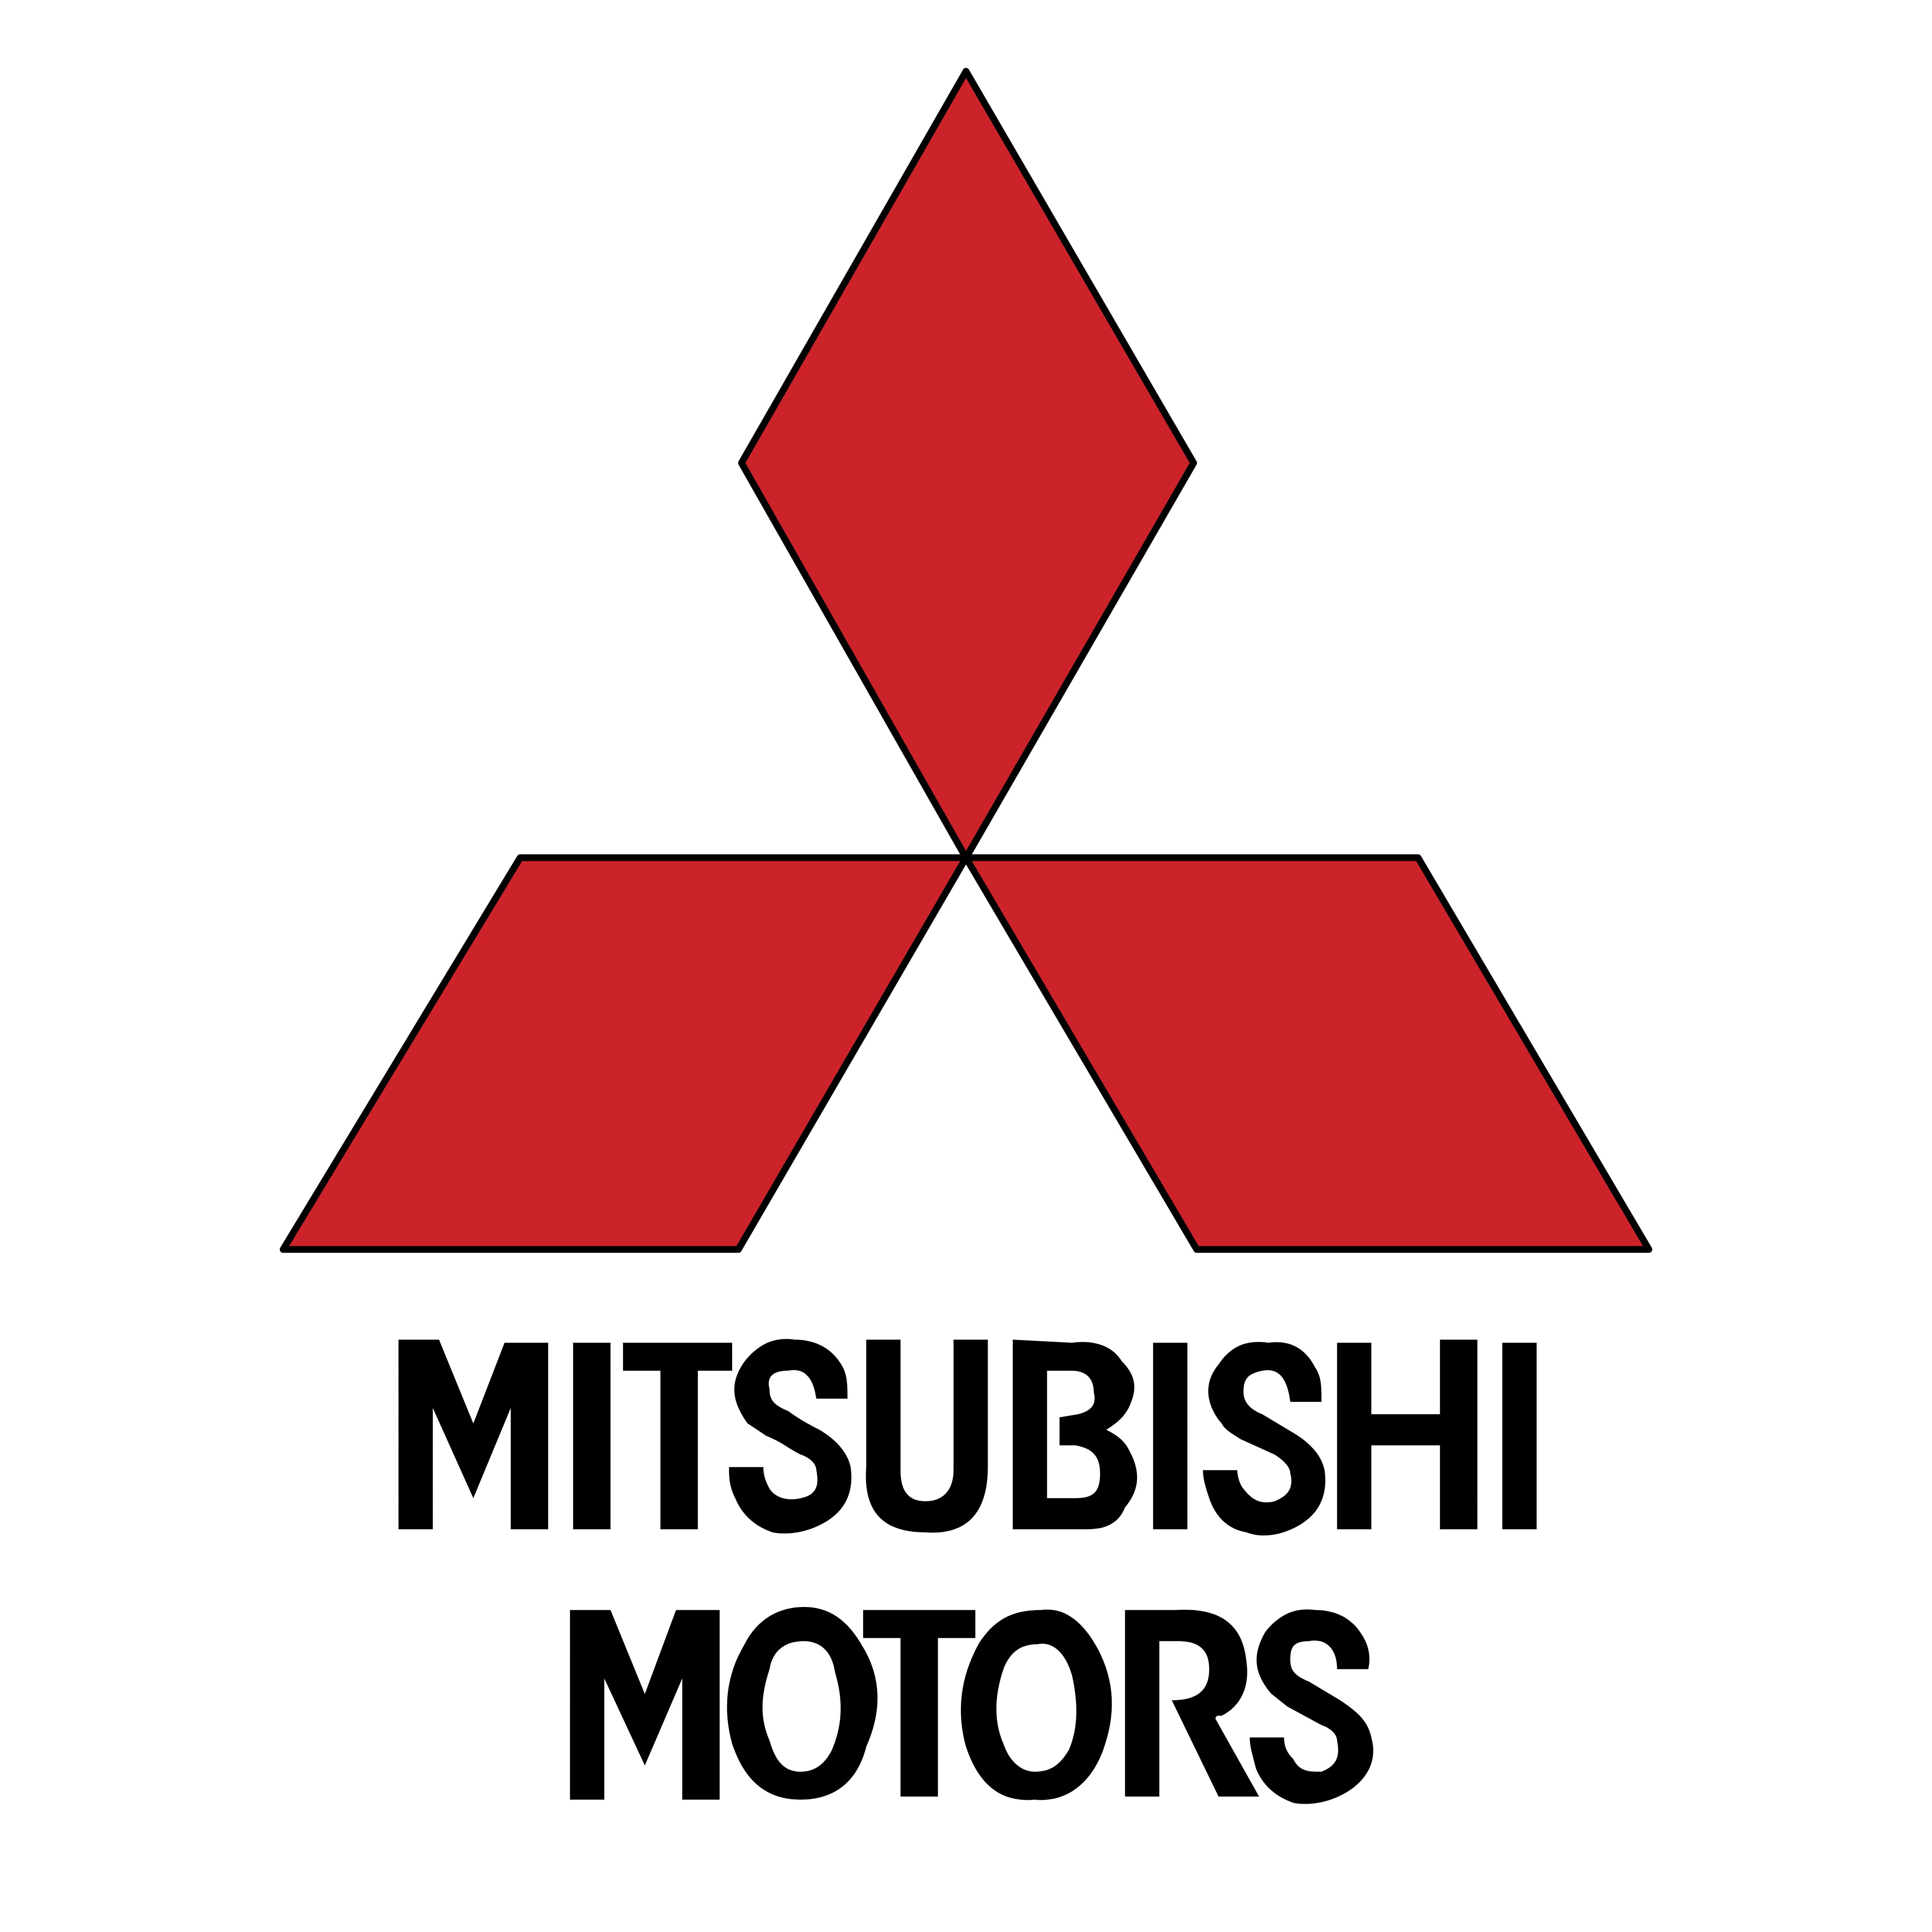 Black Mitsubishi Icon - Free 